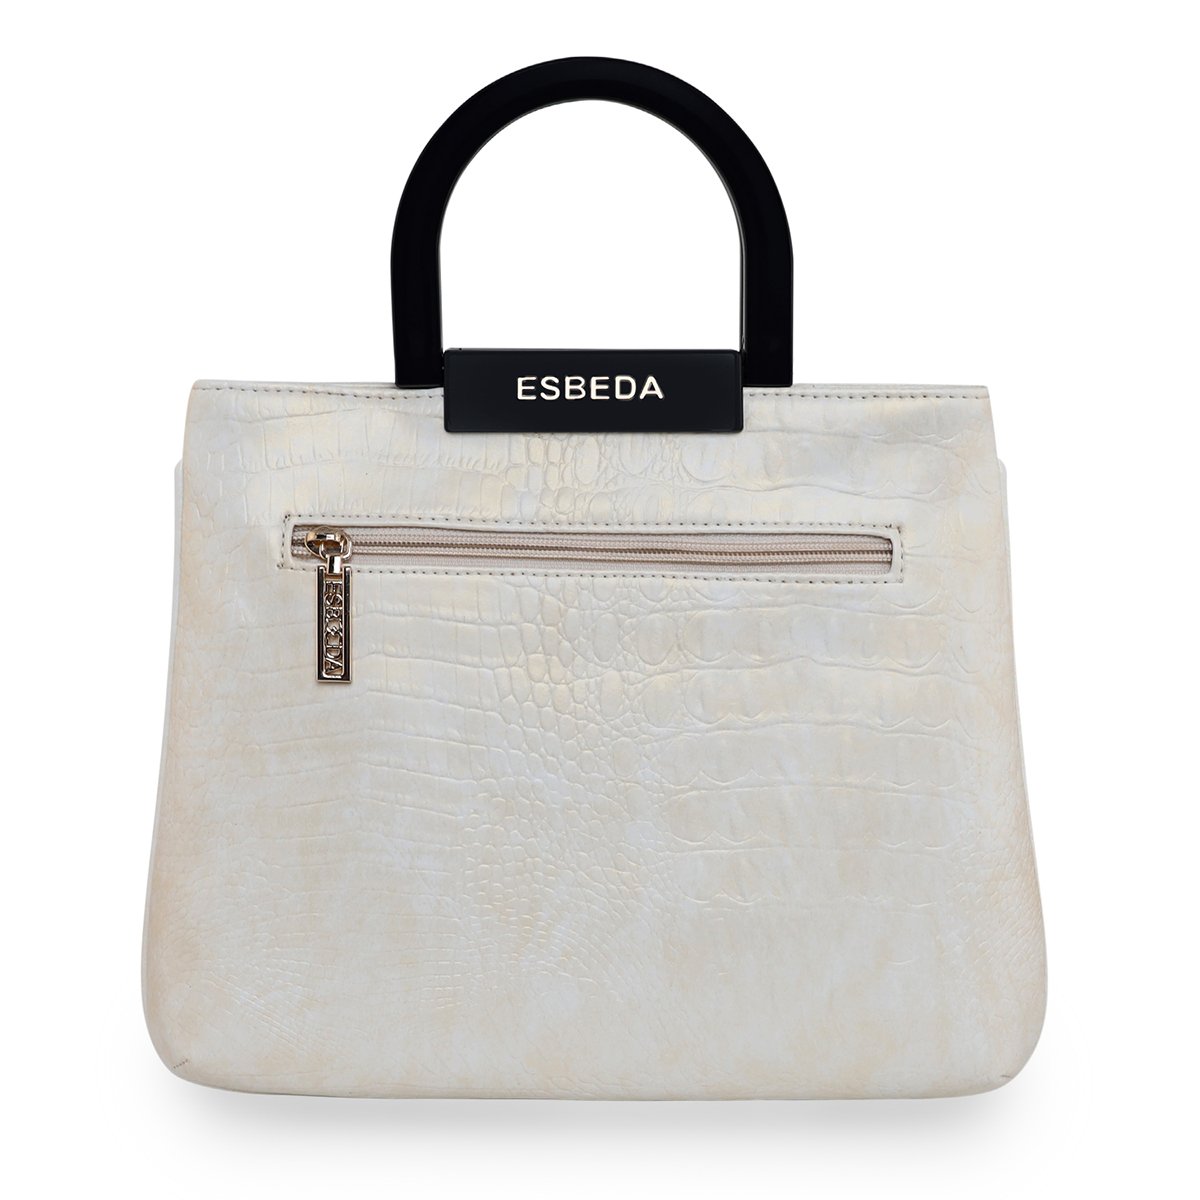 Buy ESBEDA White Color Ruby Graphic Print Handbag For Women at Amazon.in